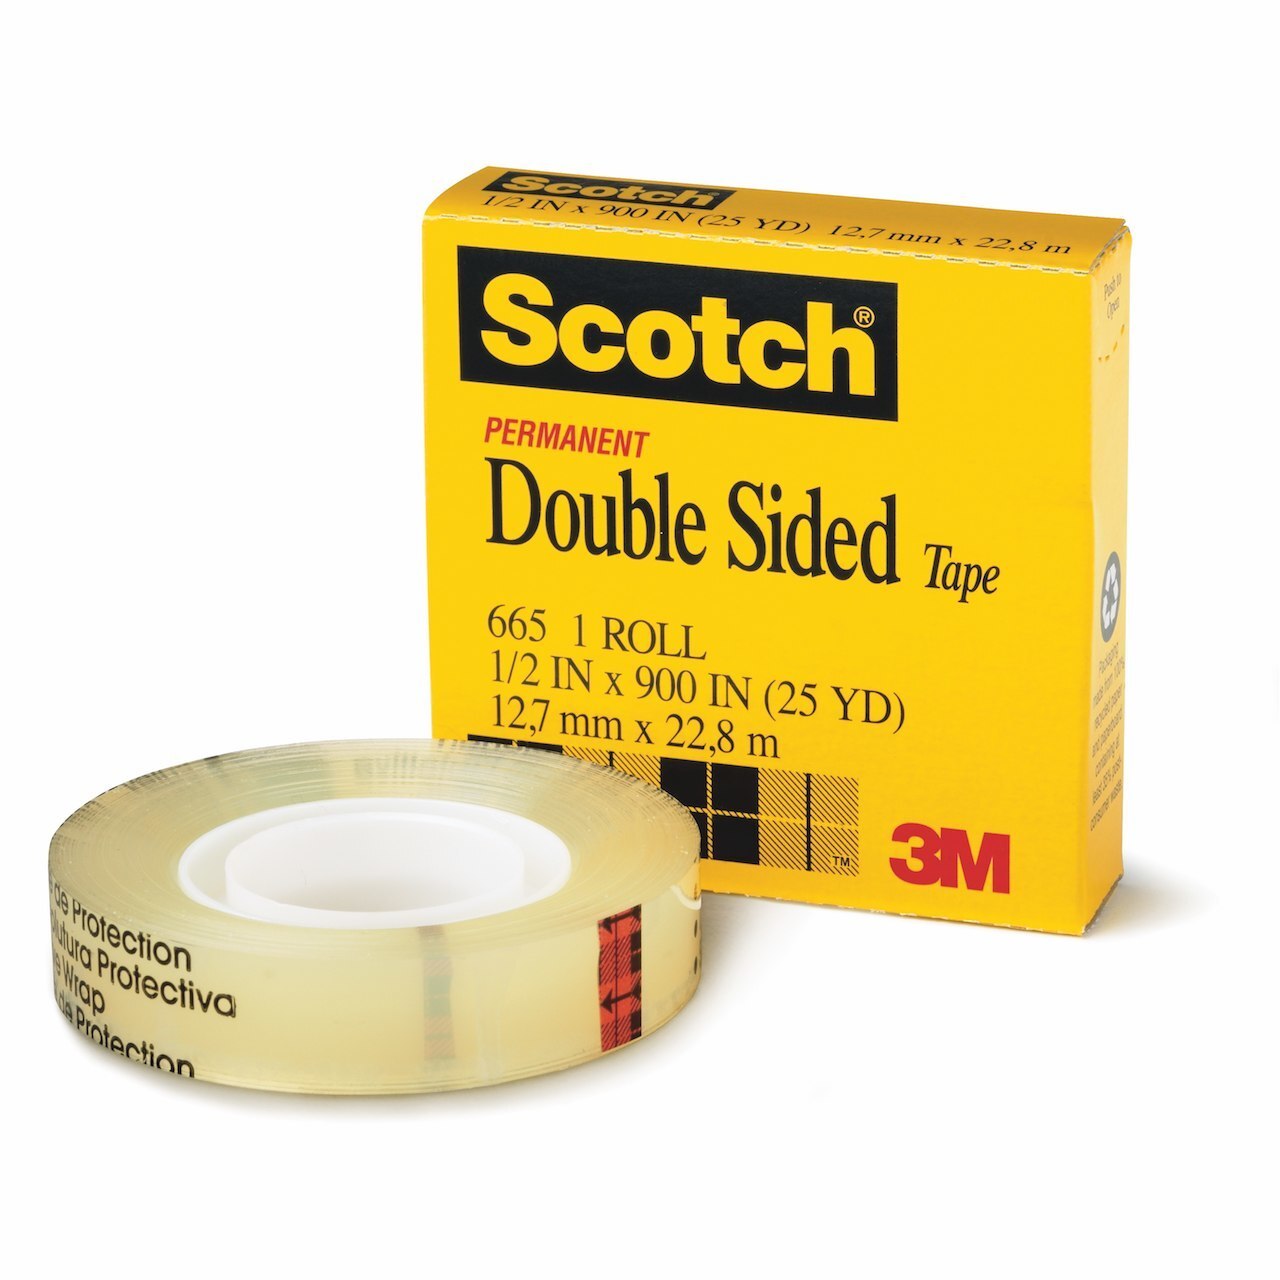 3M Scotch Double Sided Tape 12.7mm x 22.8m (665)